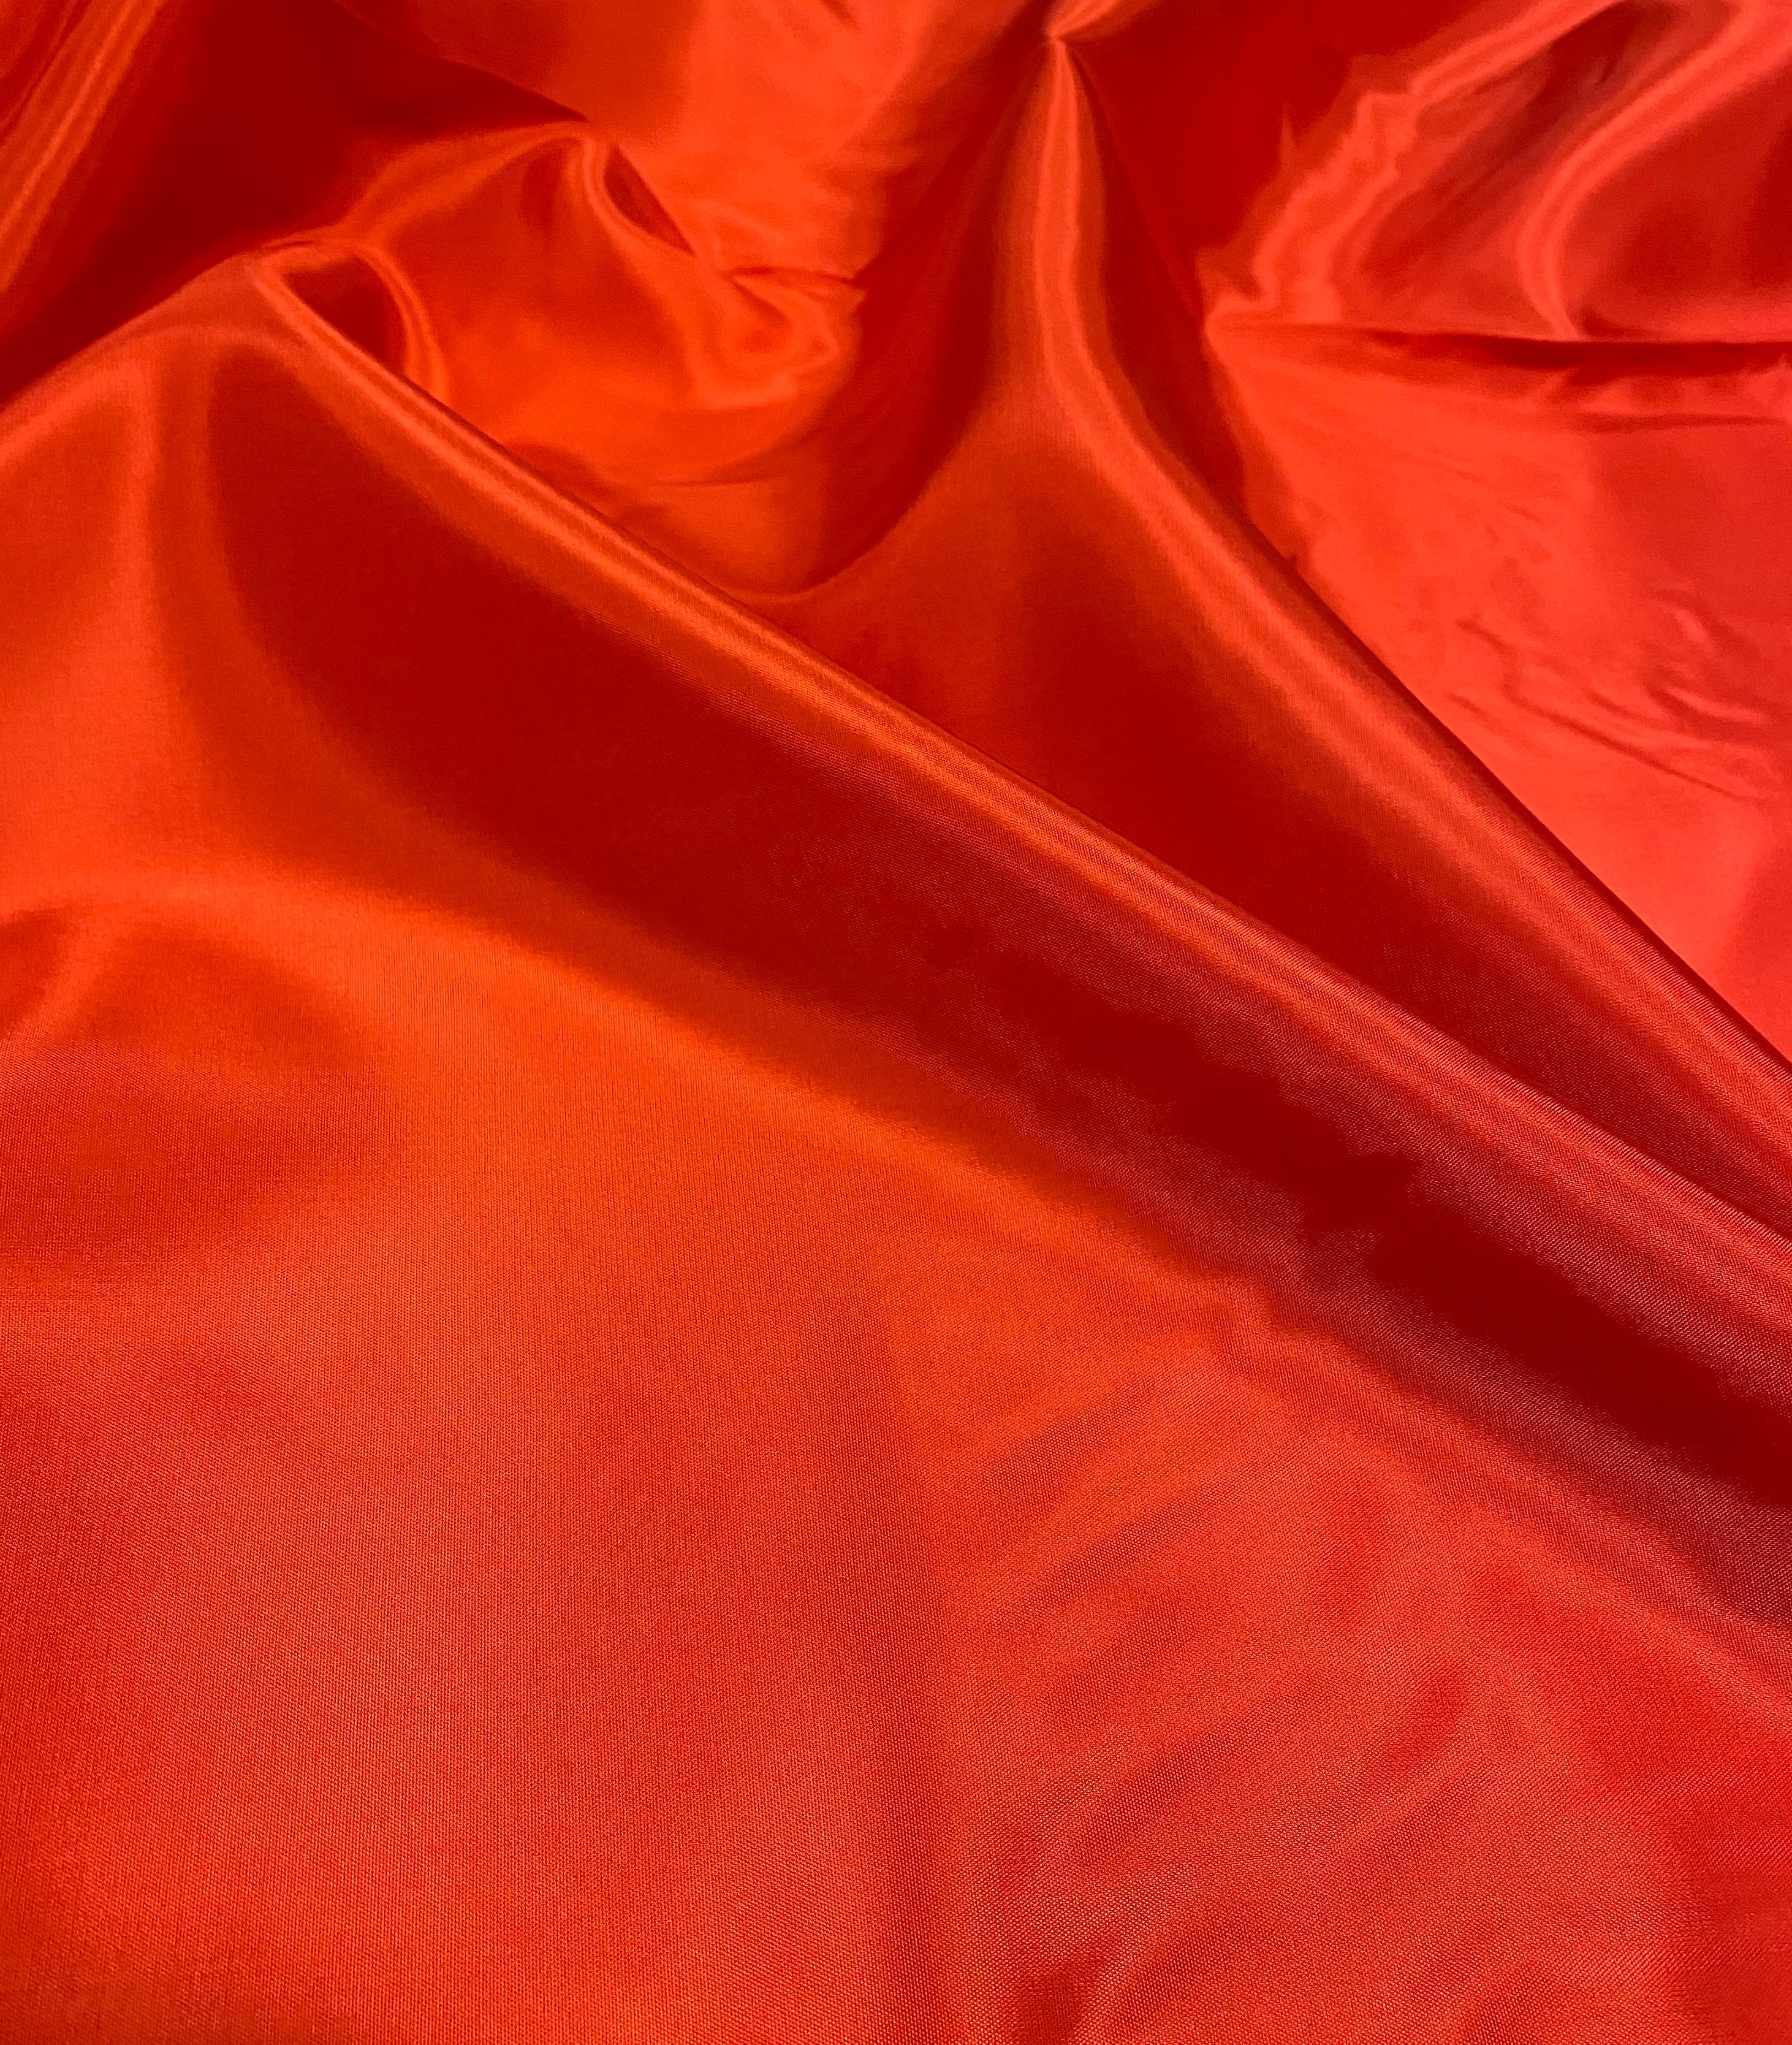 Lining material: orange-red viscose